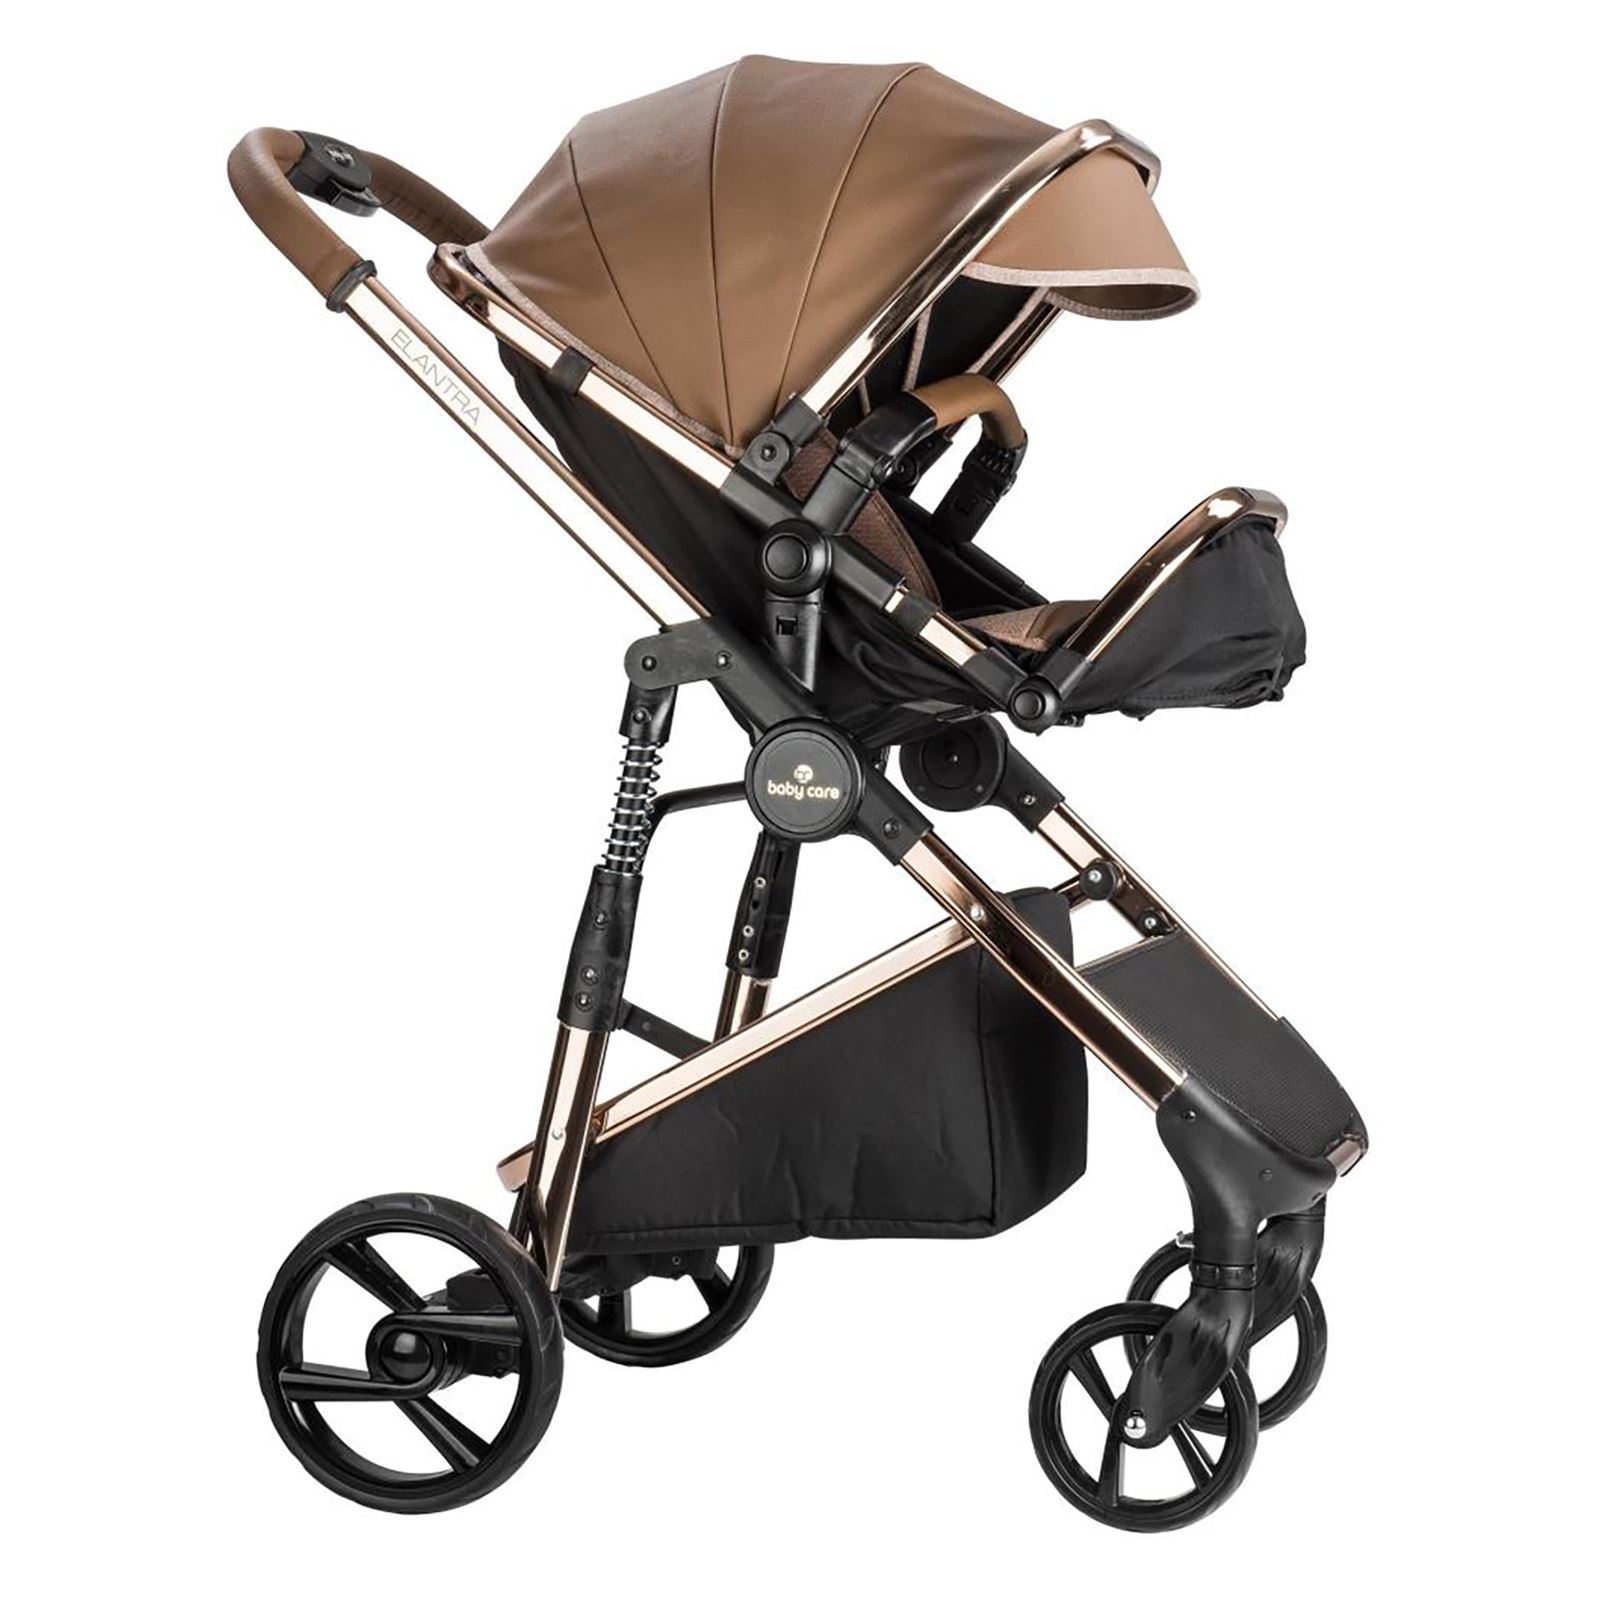 BabyCare Elantra Premium Travel Puset Sistem Bebek Arabası Siyah